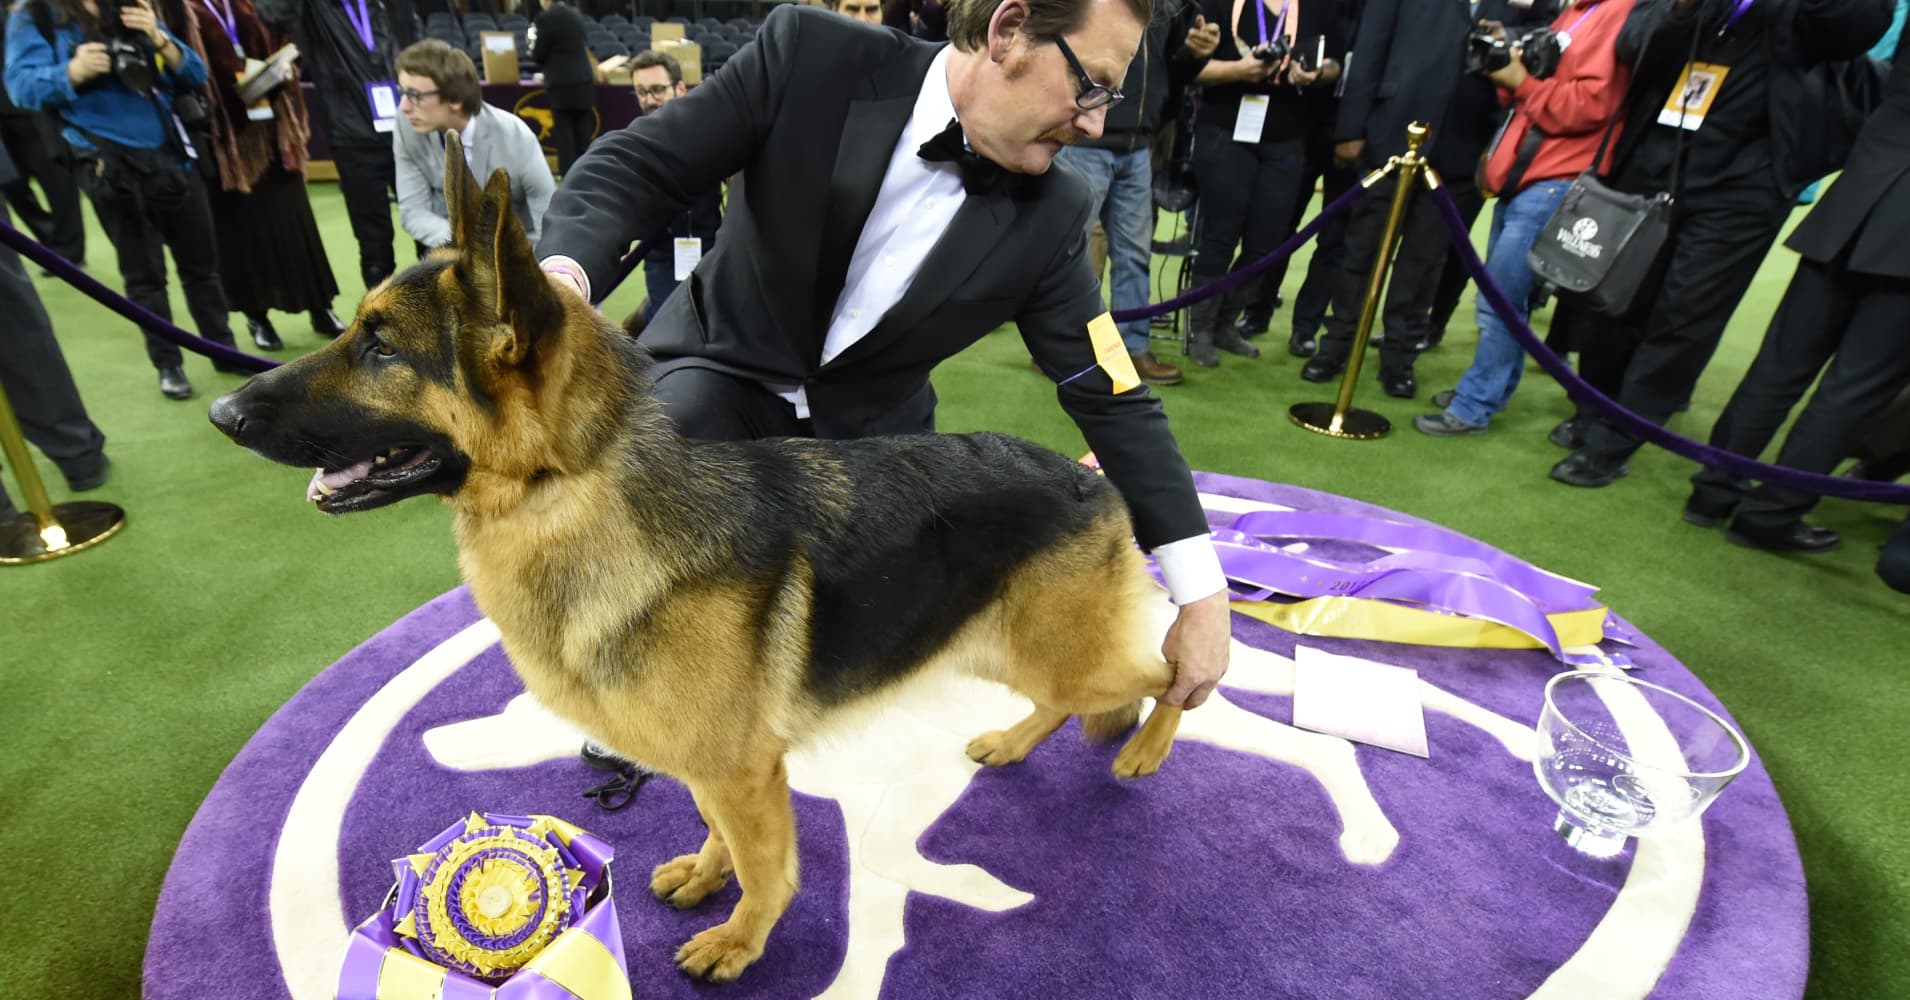 Rumor has it! German shepherd takes top prize at dog show